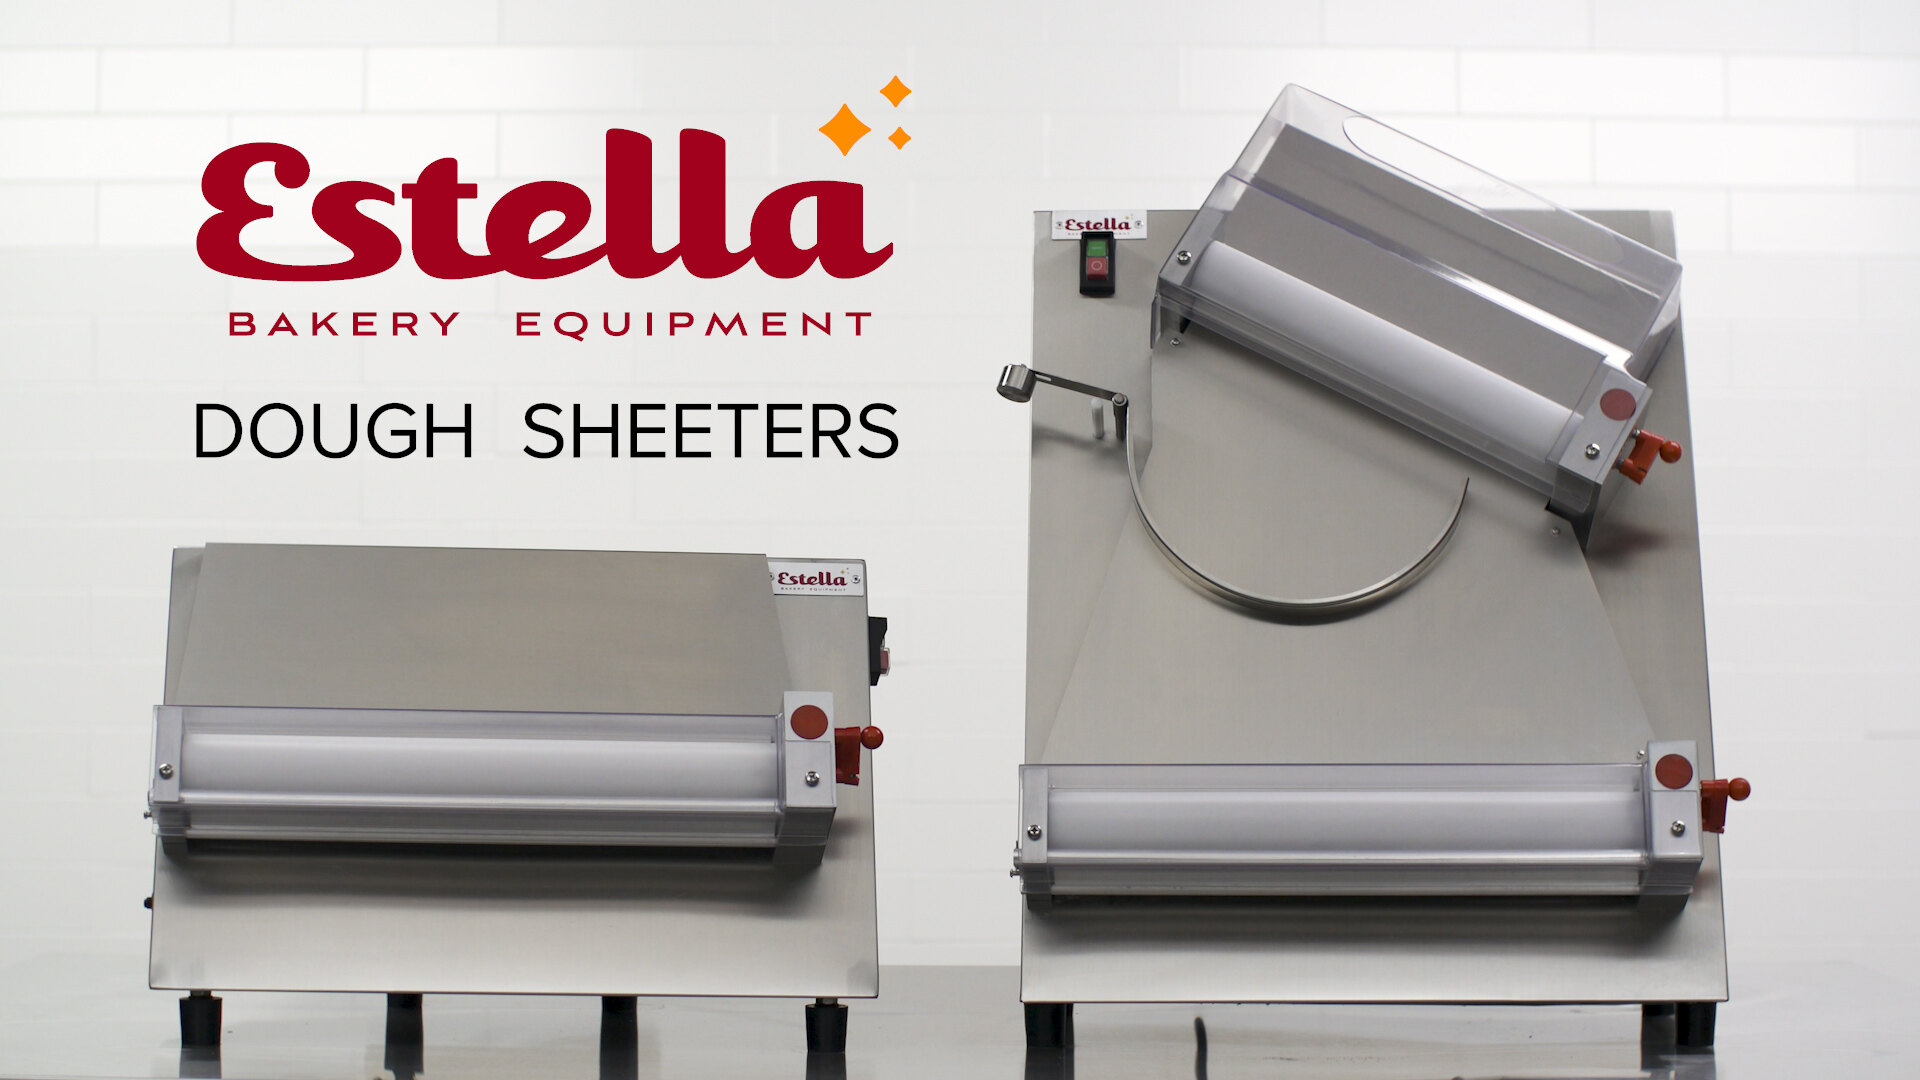 Estella DSC78 78 Countertop Reversible Dough Sheeter - 110V, 3/4 hp